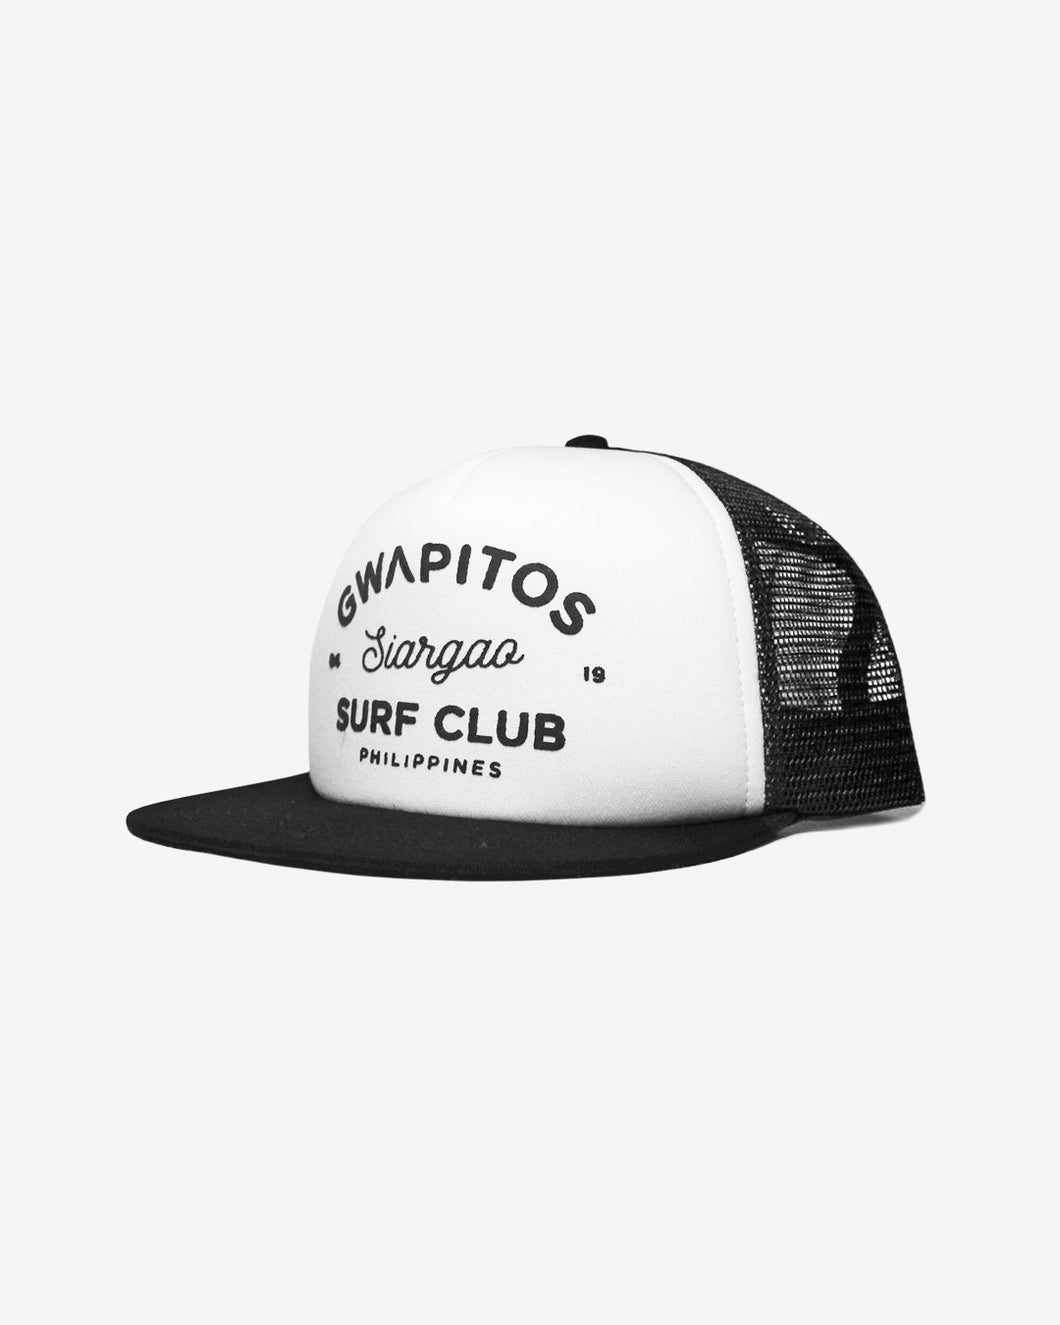 Gwapitos Surf Club Trucker Cap - KS Boardriders | Philippines Online Branded Clothes & Surf Shop